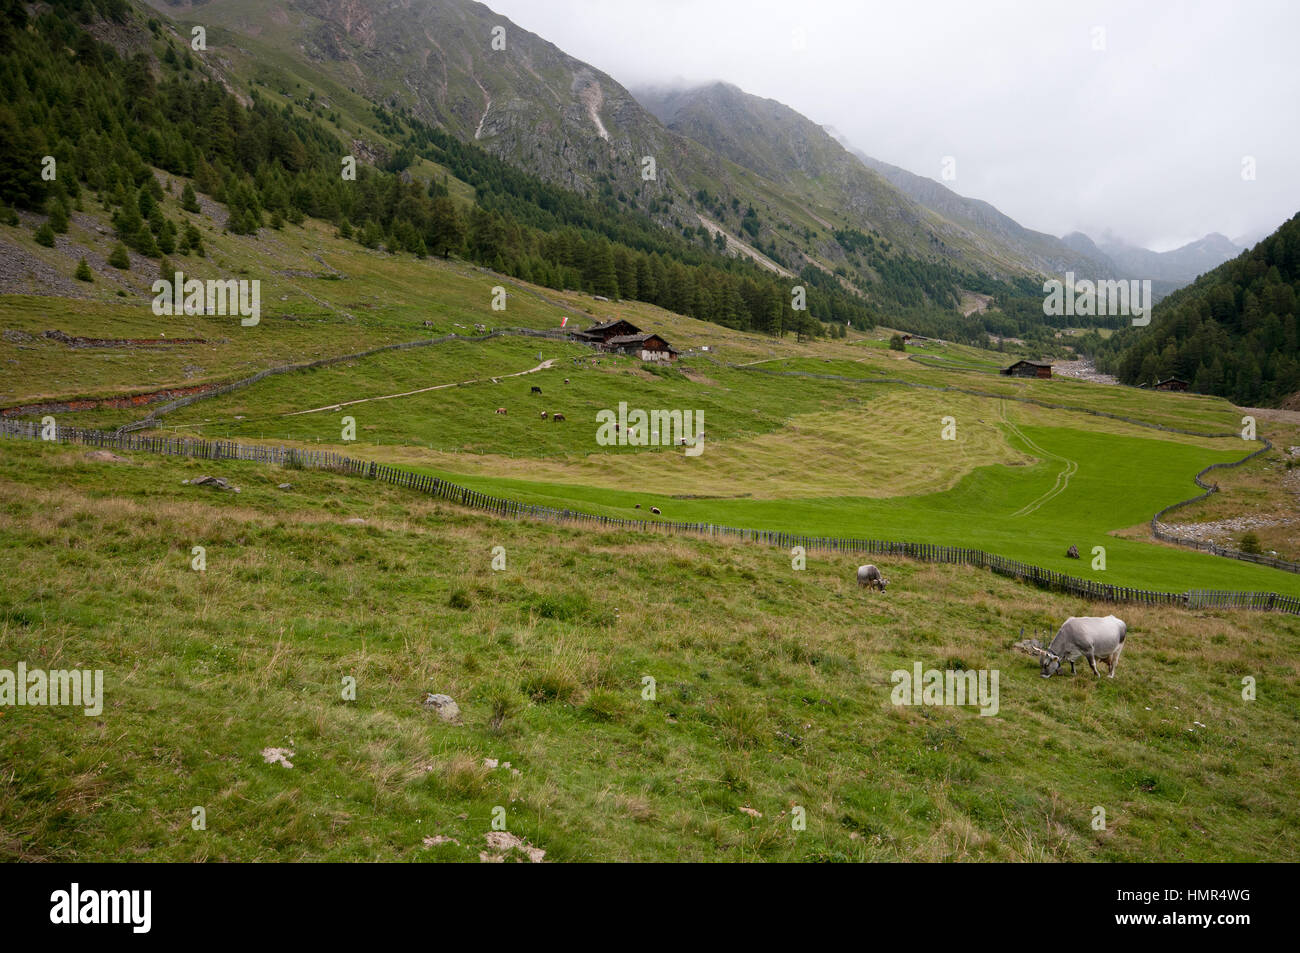 Val di Fosse (Pfossental) with cows grazing, Val Senales (Schnalstal), Trentino Alto Adige, Italy Stock Photo